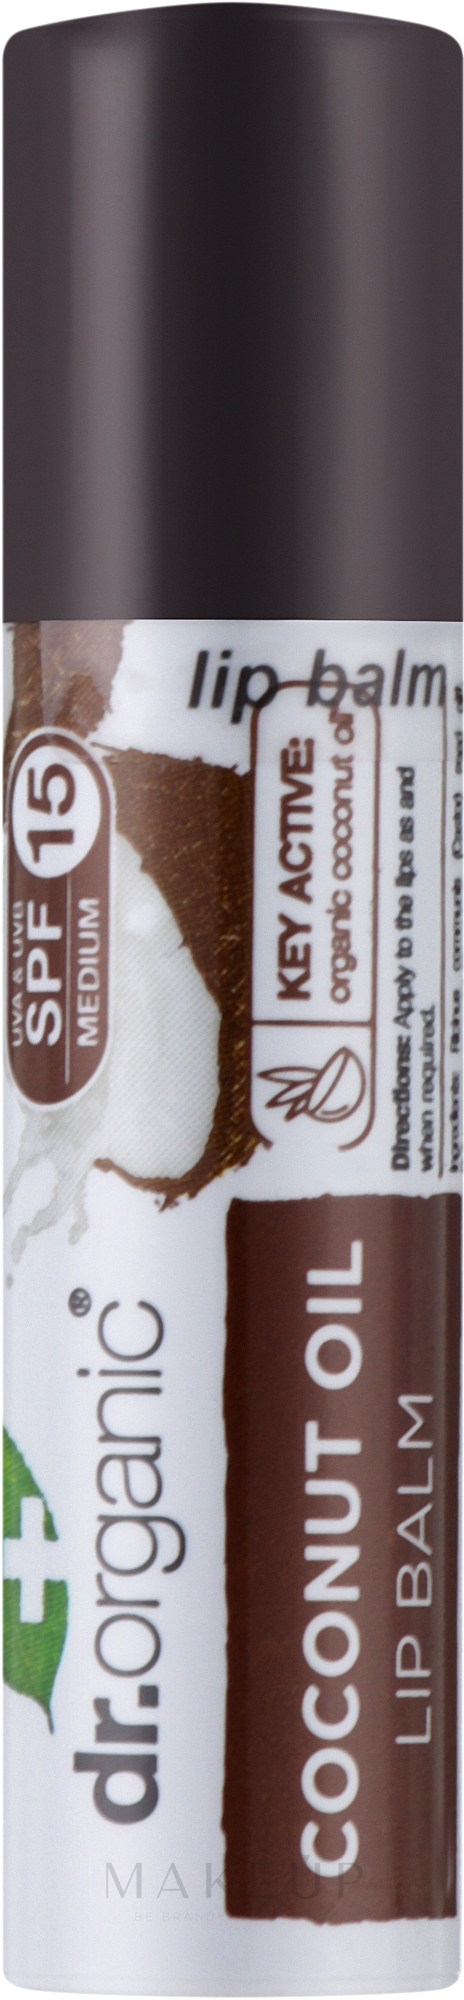 Lippenbalsam mit Kokosöl - Dr. Organic Bioactive Skincare Virgin Coconut Oil Lip Balm SPF15 — Bild 5.7 ml